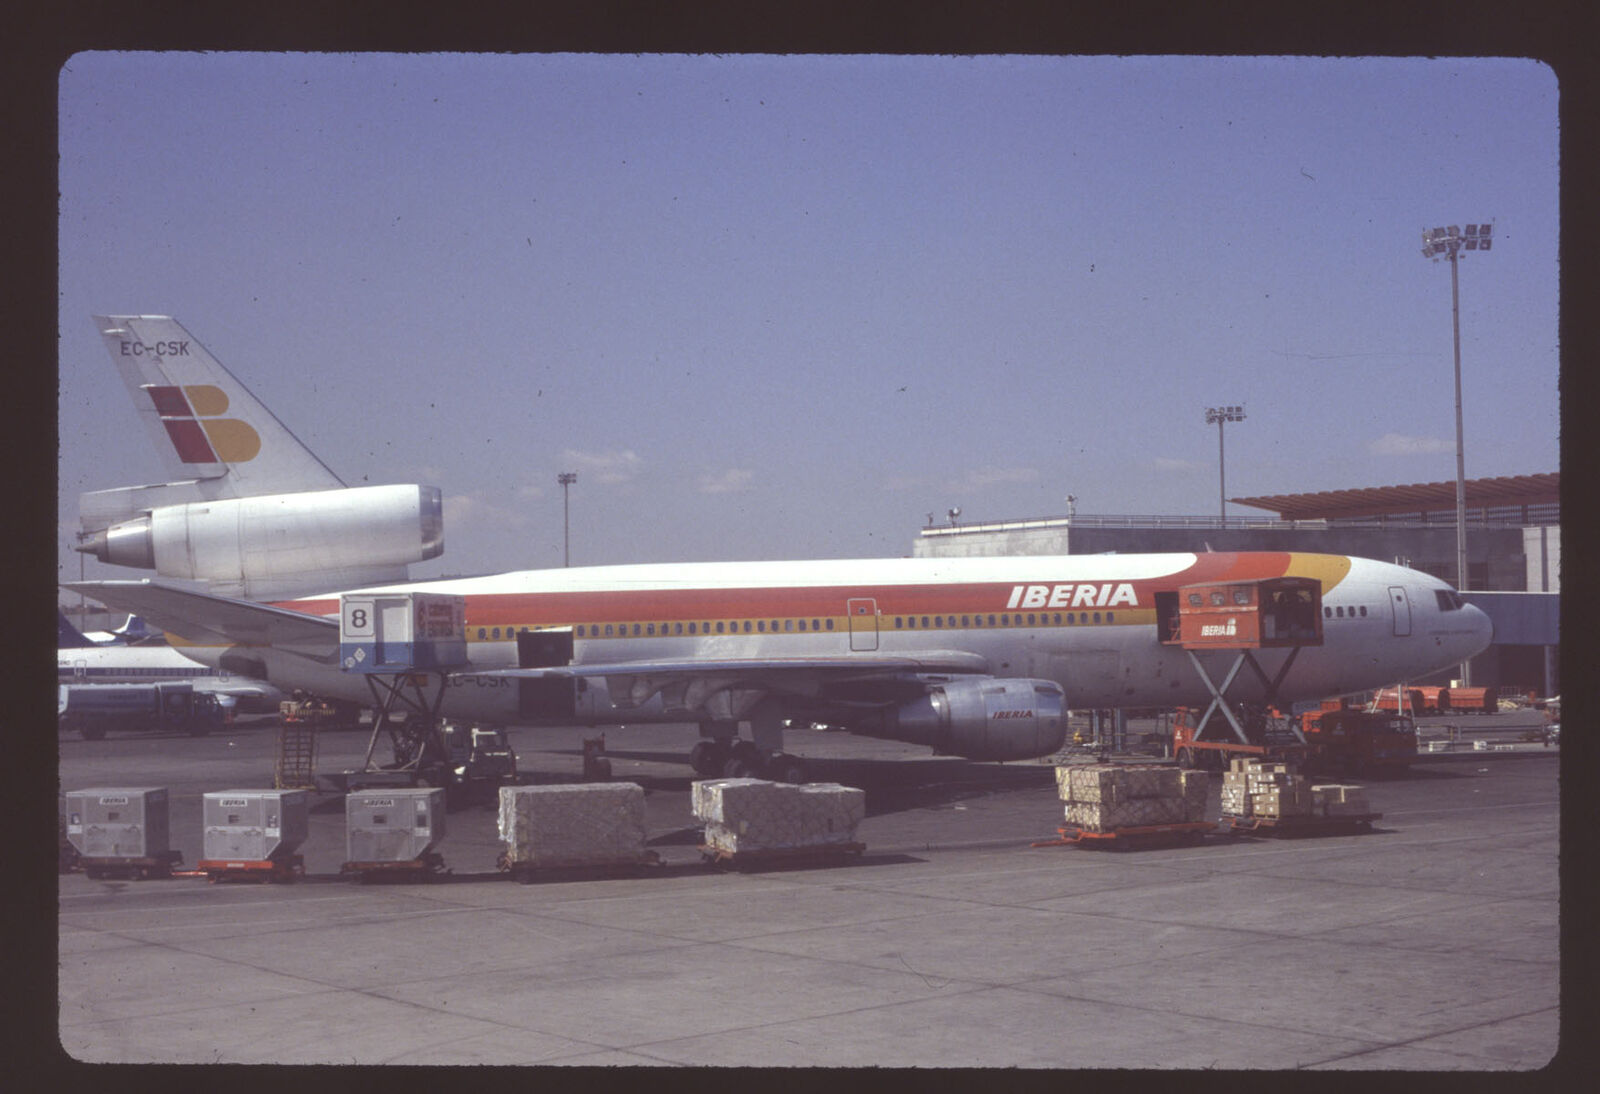 Orig 35mm airline slide Iberia DC-10-30 EC-CSK [3123]